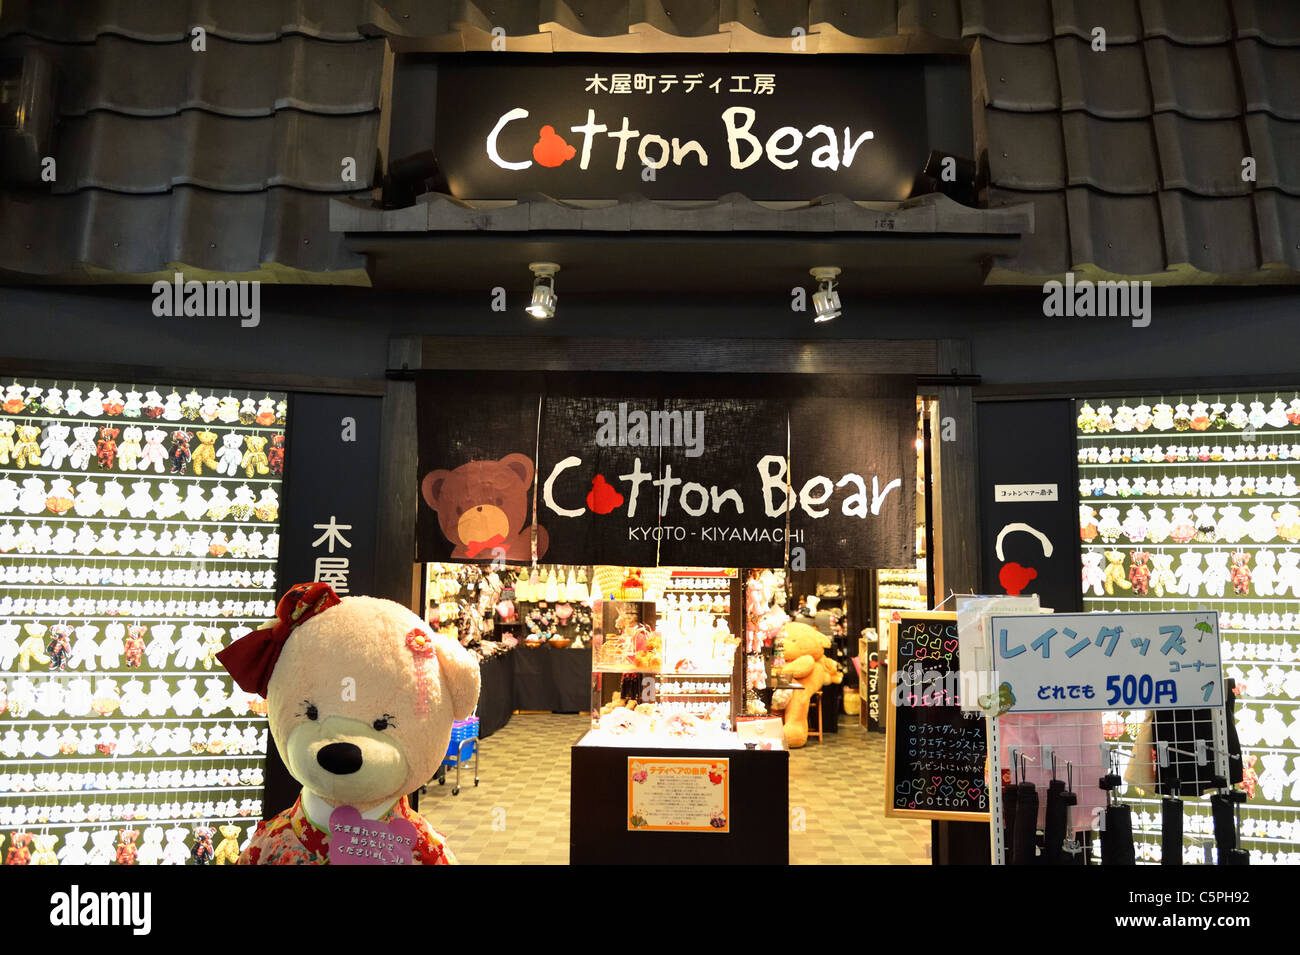 The Cotton Bear shop, Kyoto Japan JP Stock Photo - Alamy